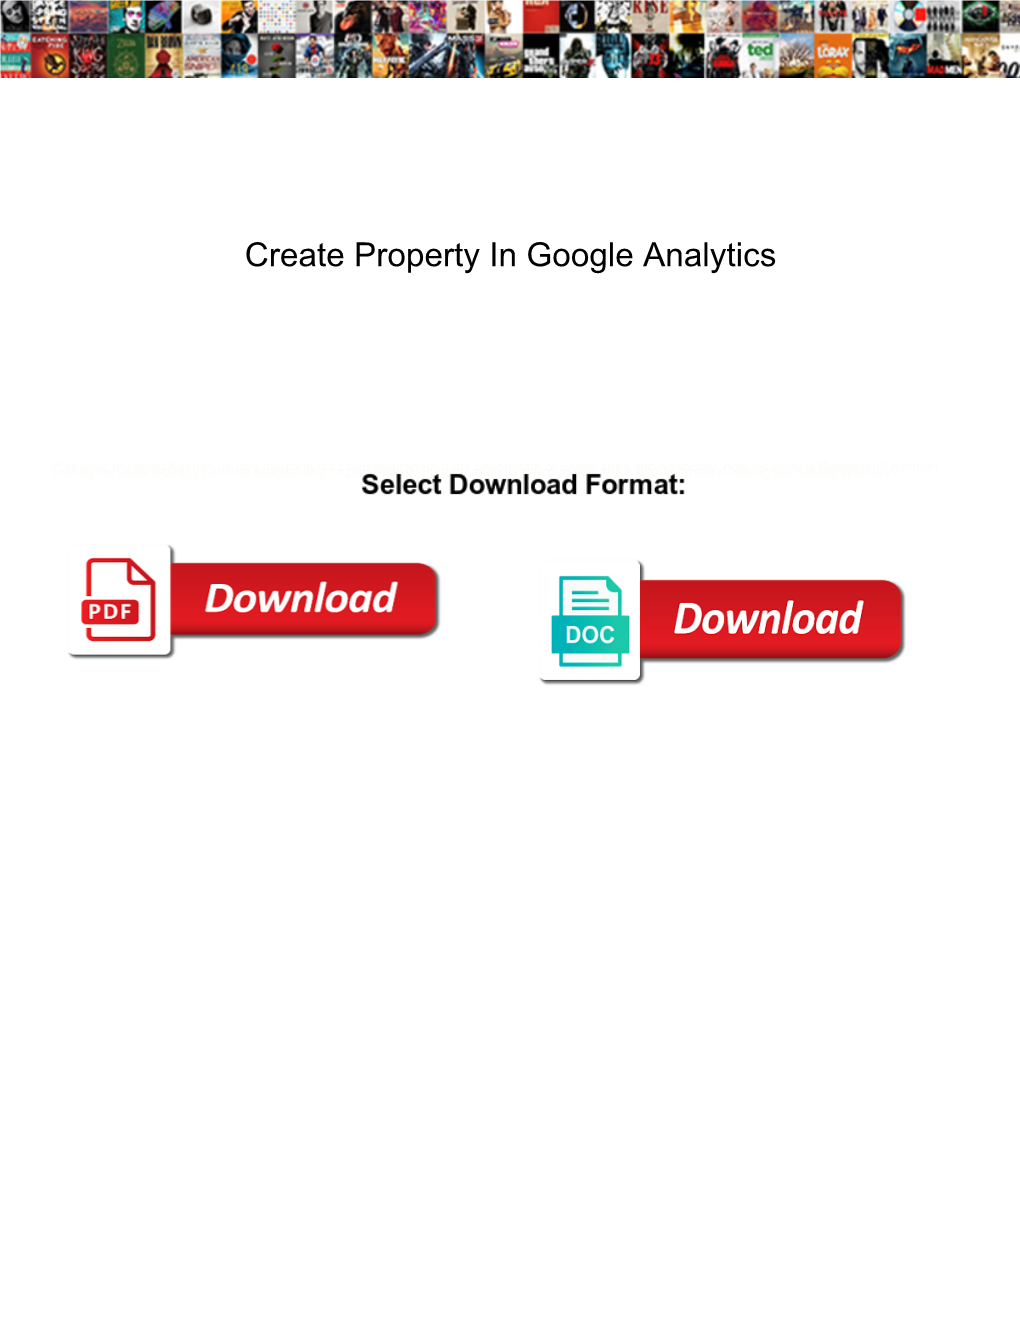 Create Property in Google Analytics